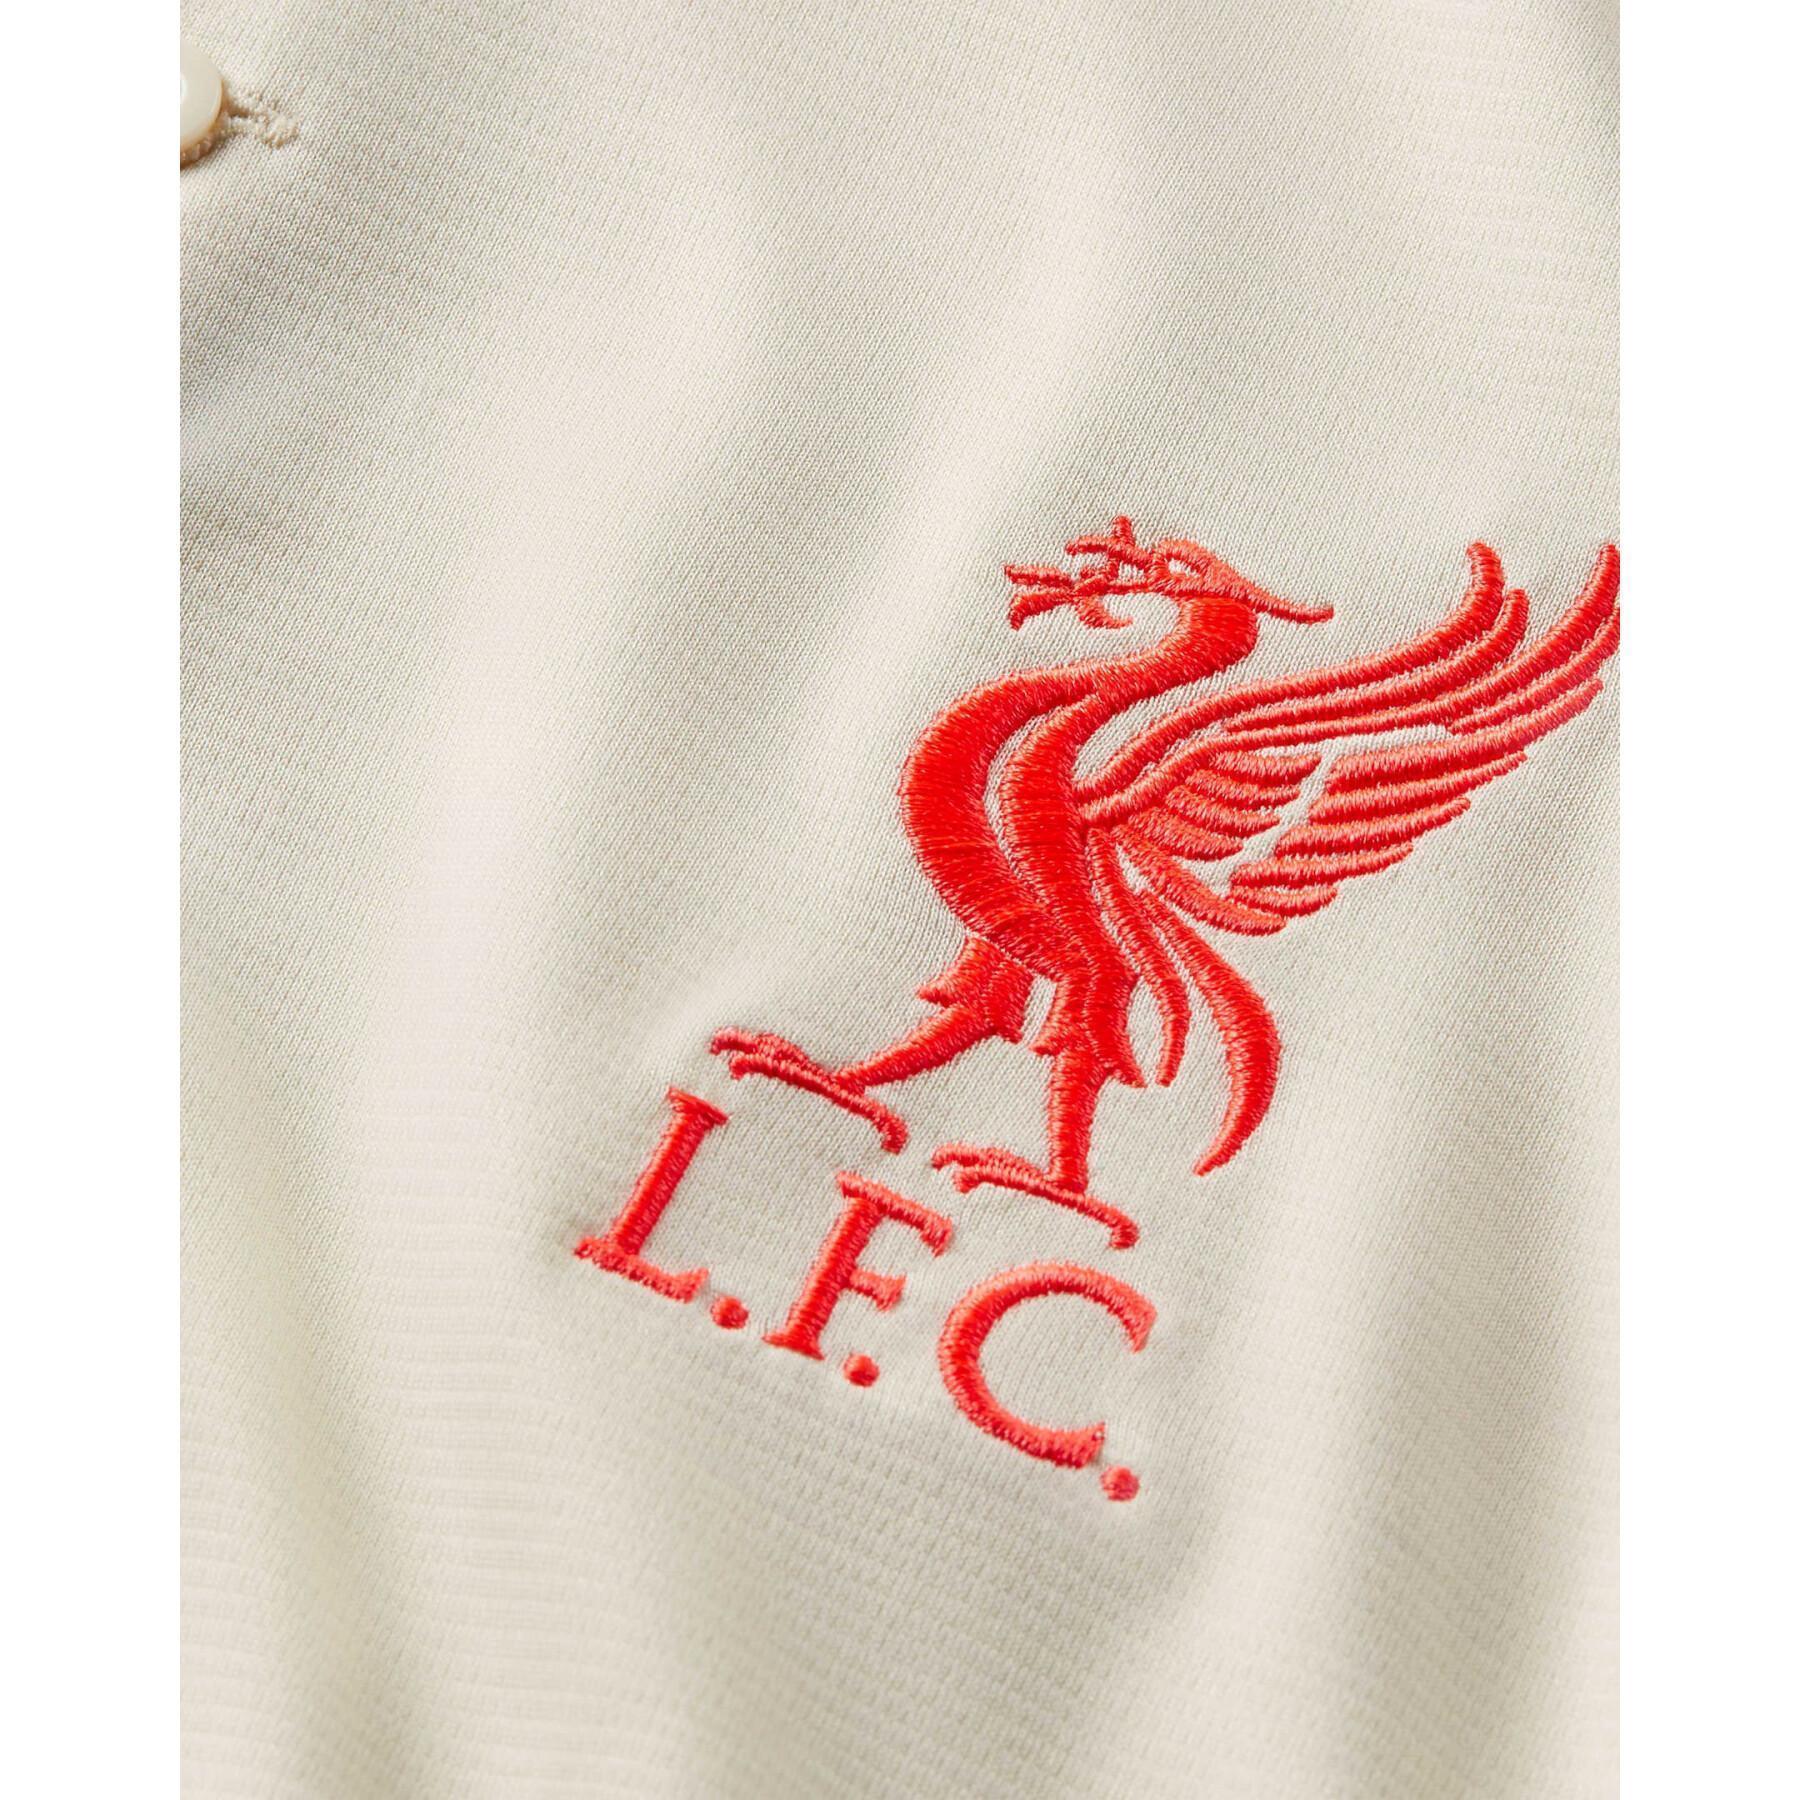 Outdoor jersey Liverpool FC 2021/22